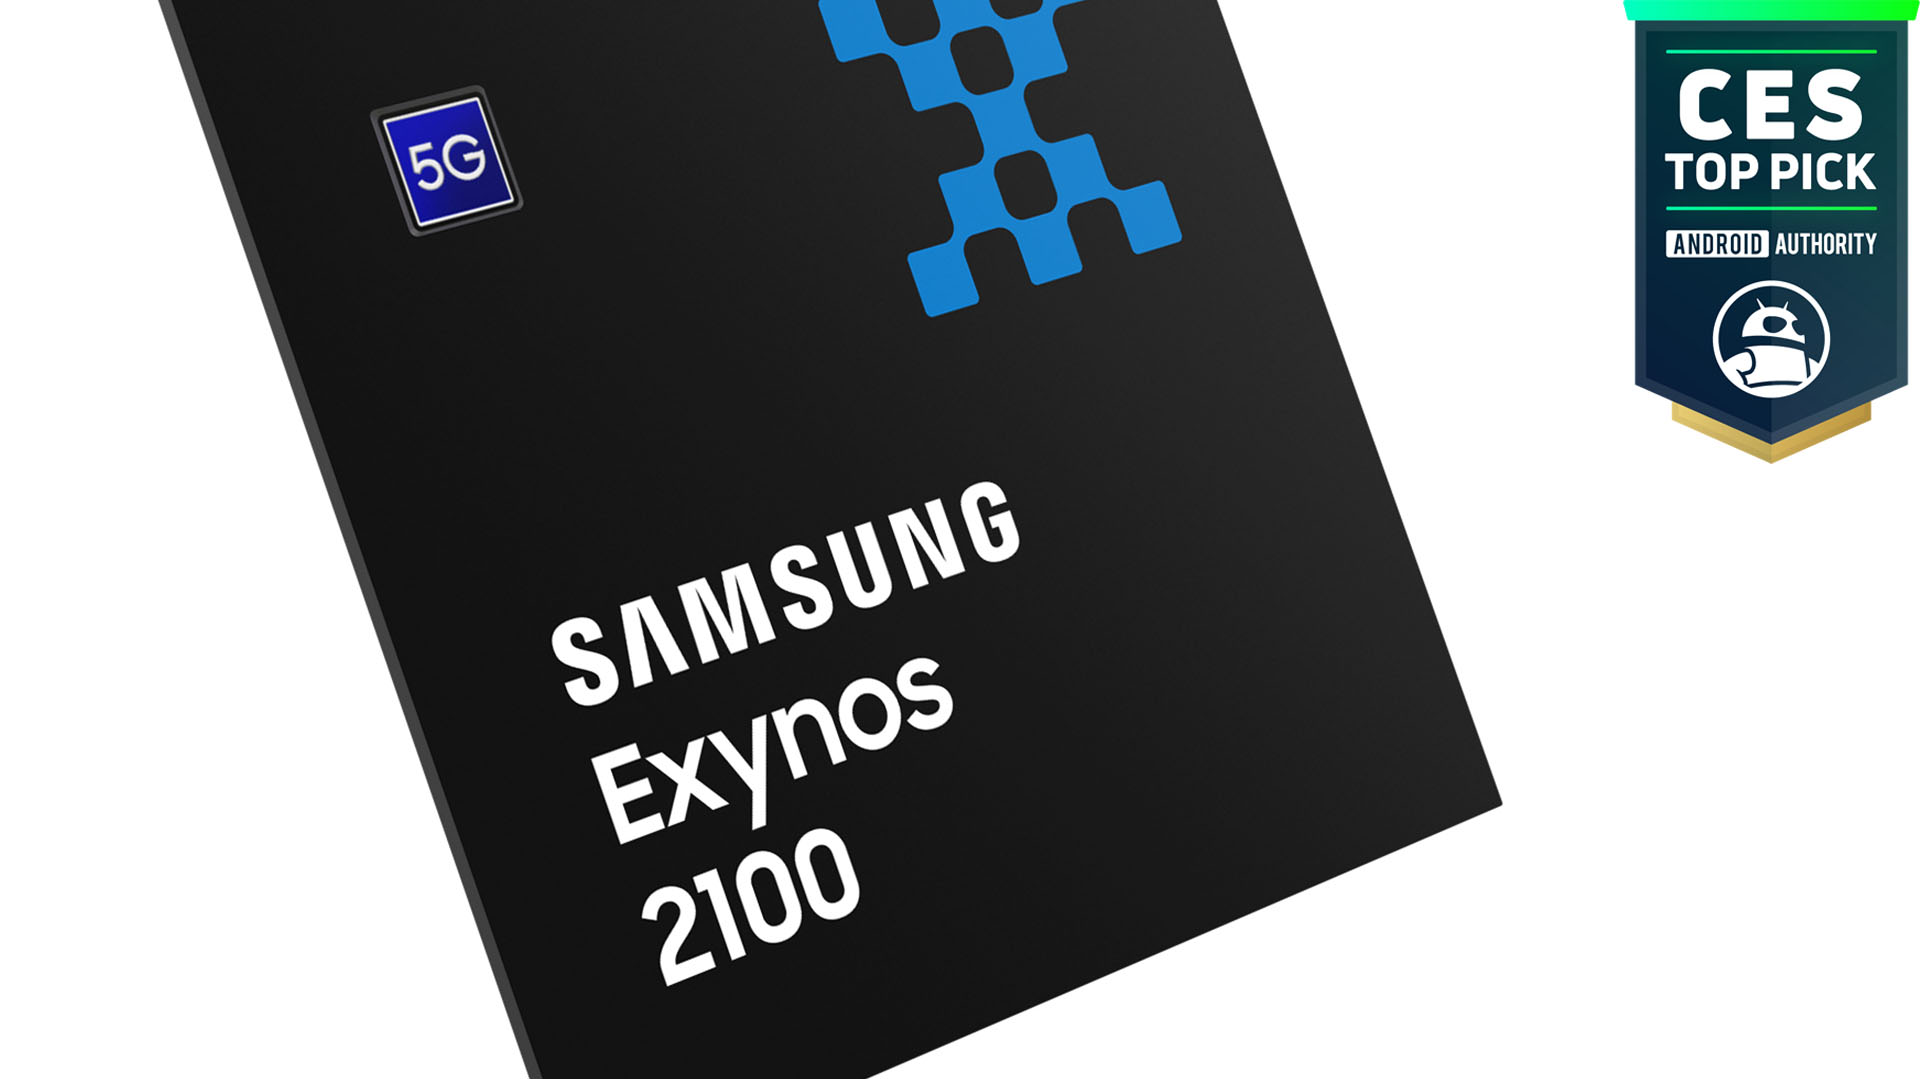 Samsung Exynos 2100 CES 2021 Top Pick Award